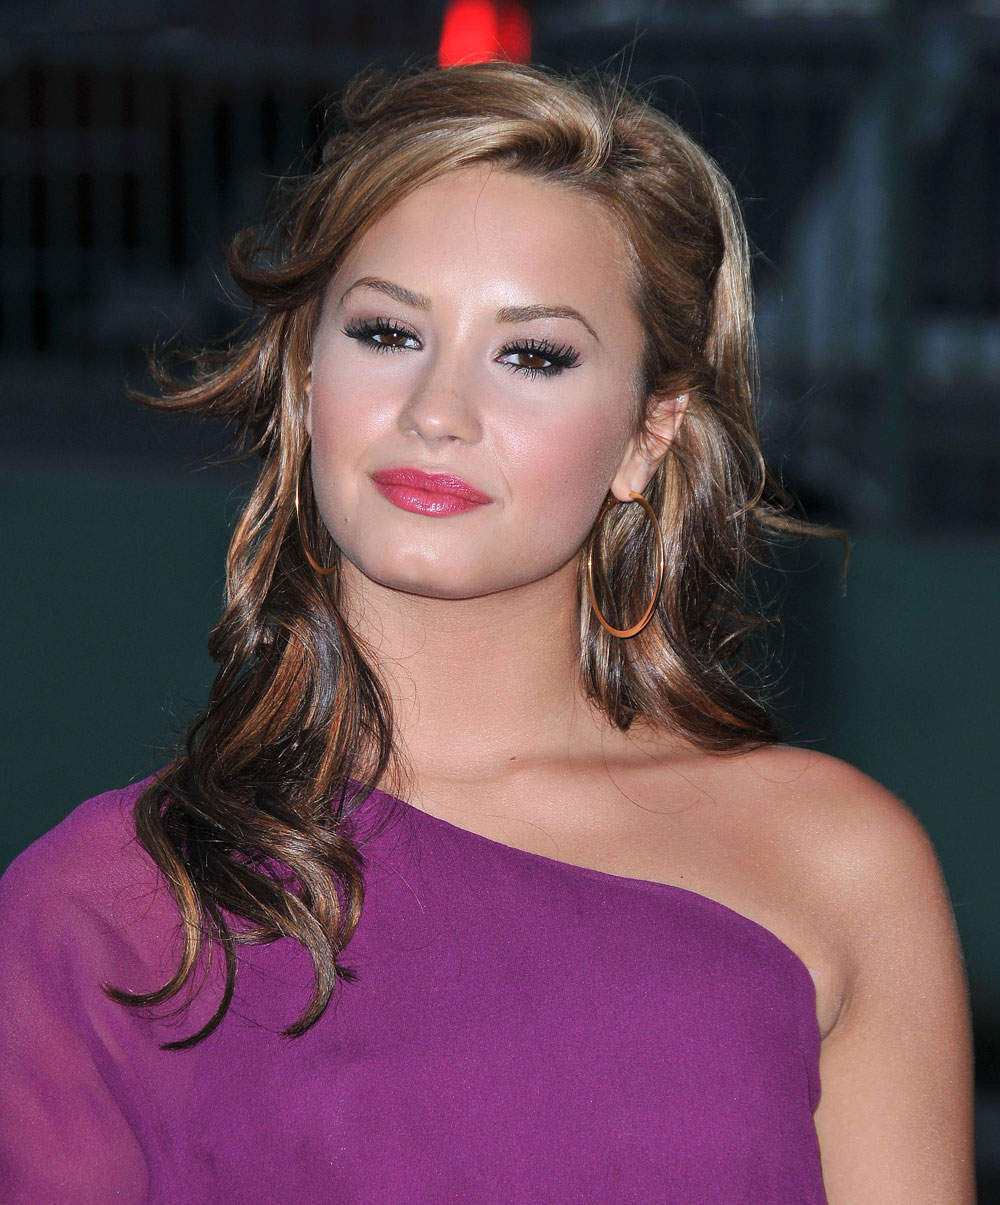 Singer/actress Demi Lovato,